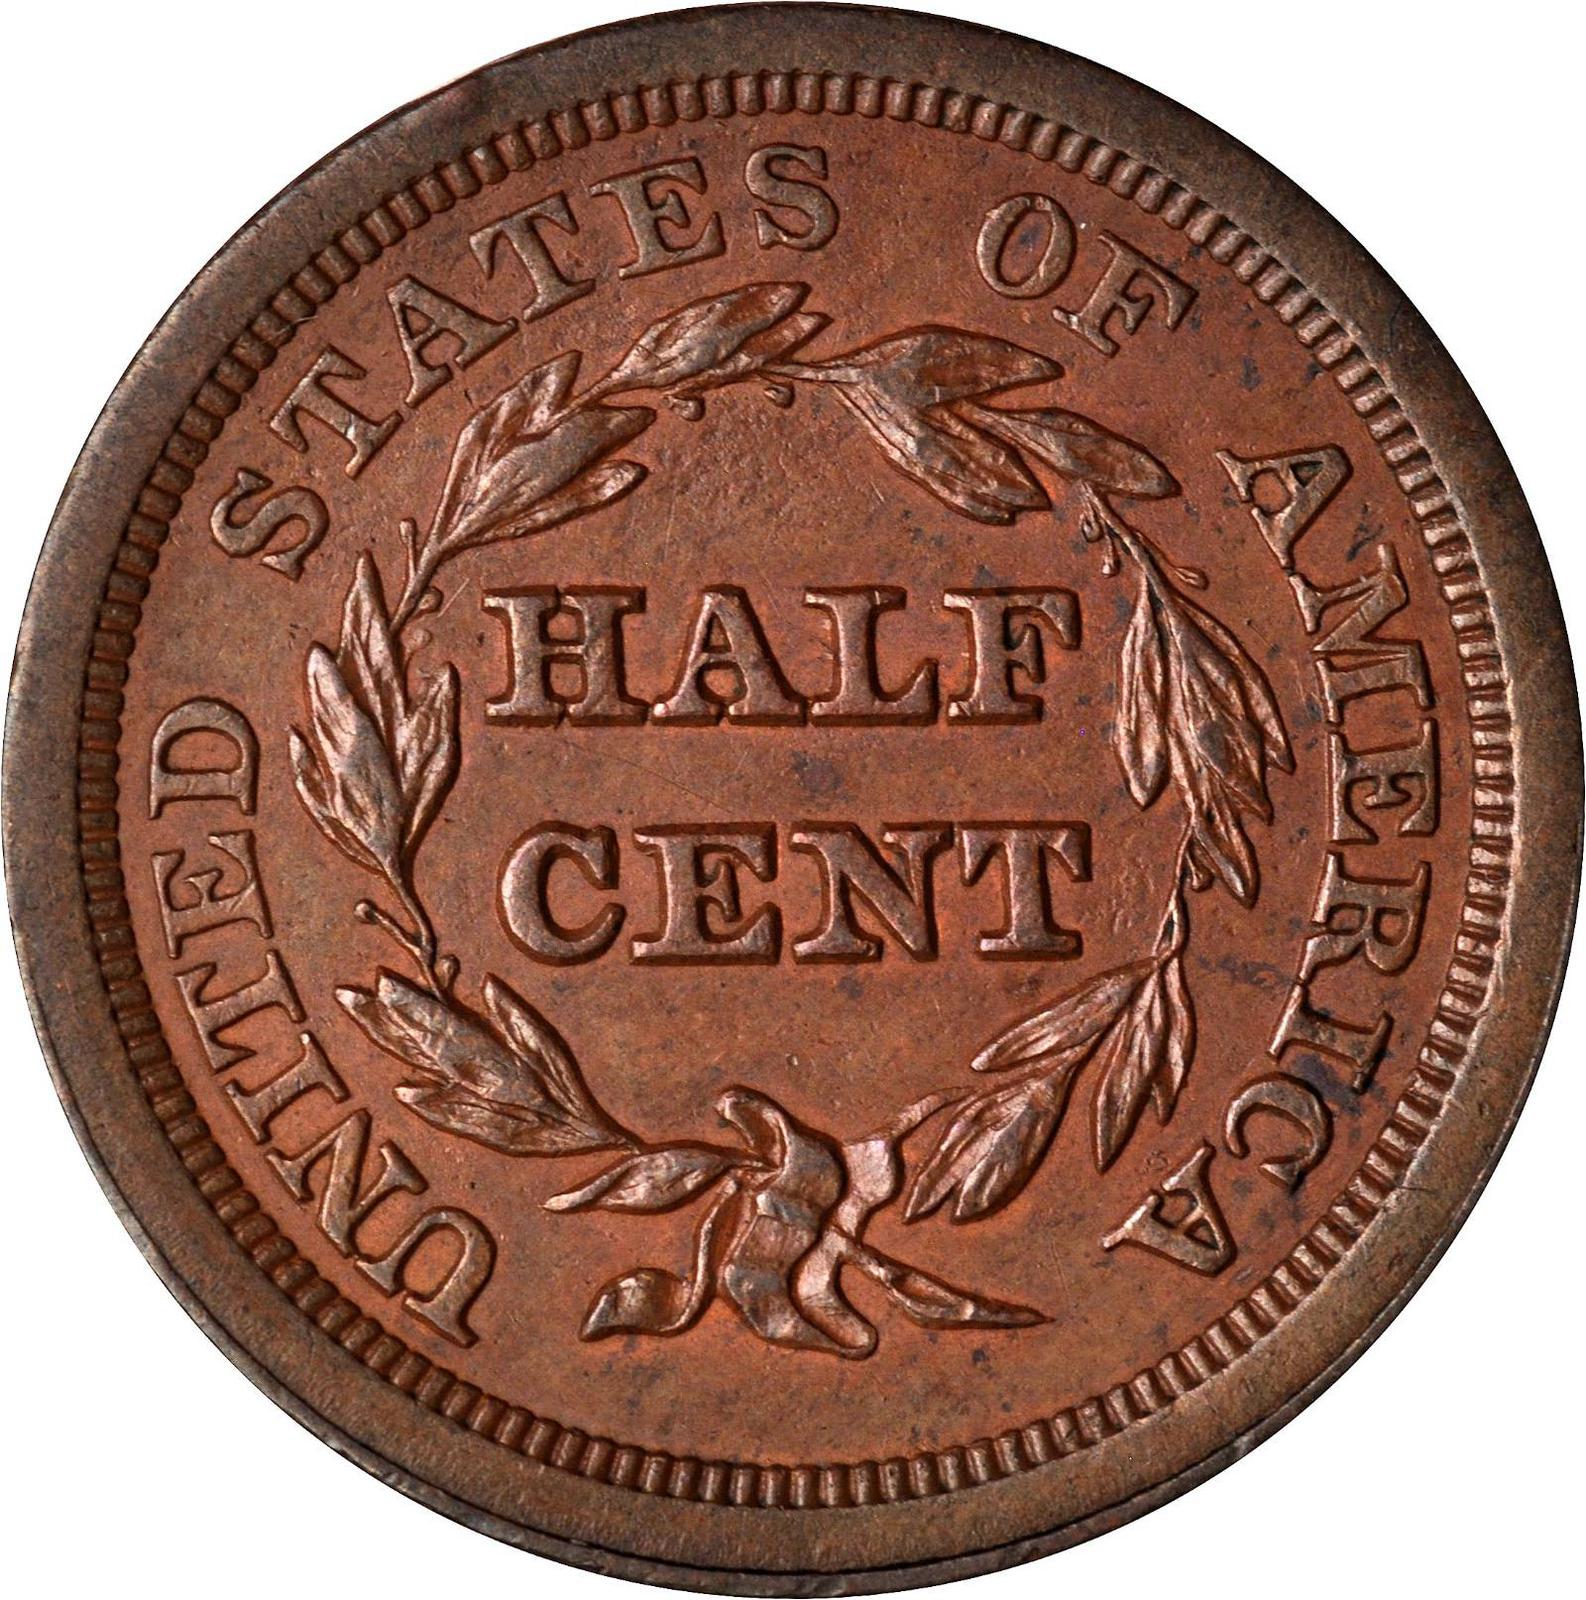 https://coinappraiser.com/wp-content/uploads/2016/09/Braided-Hair-Half-Cents-1851-Reverse.jpeg